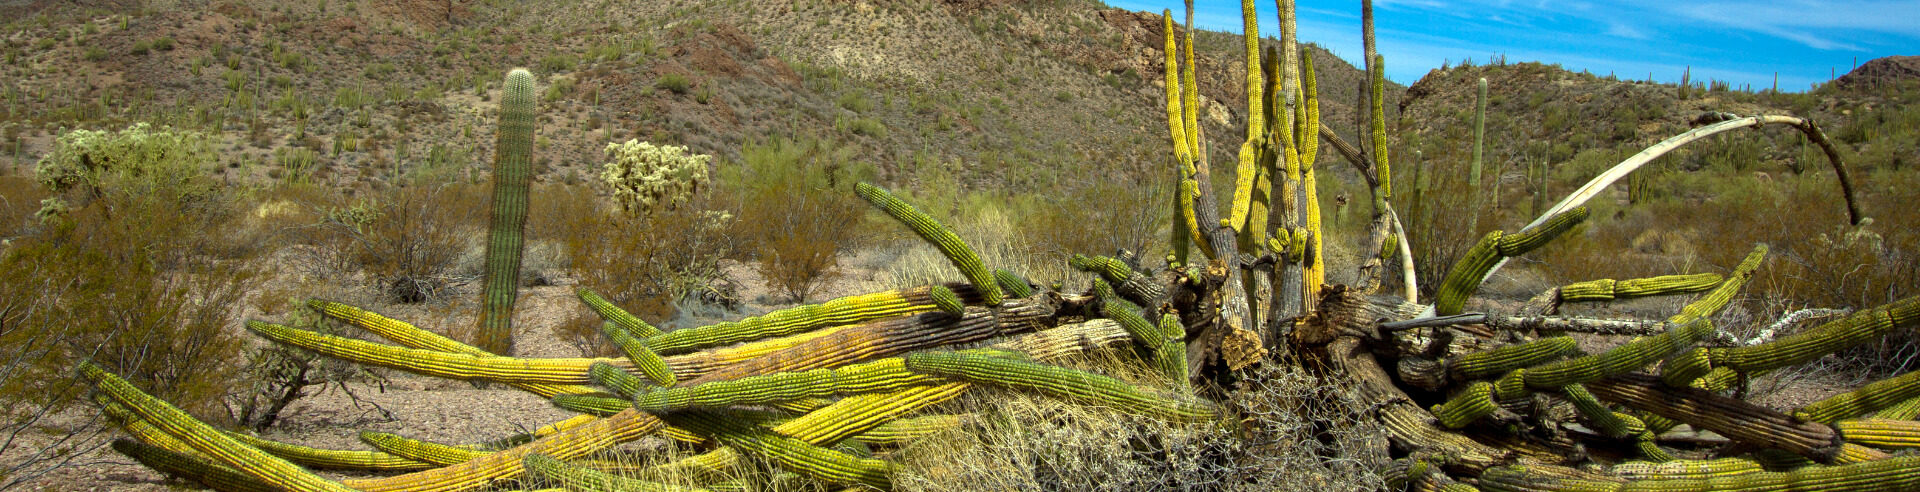 Dying cactus in Phoenix